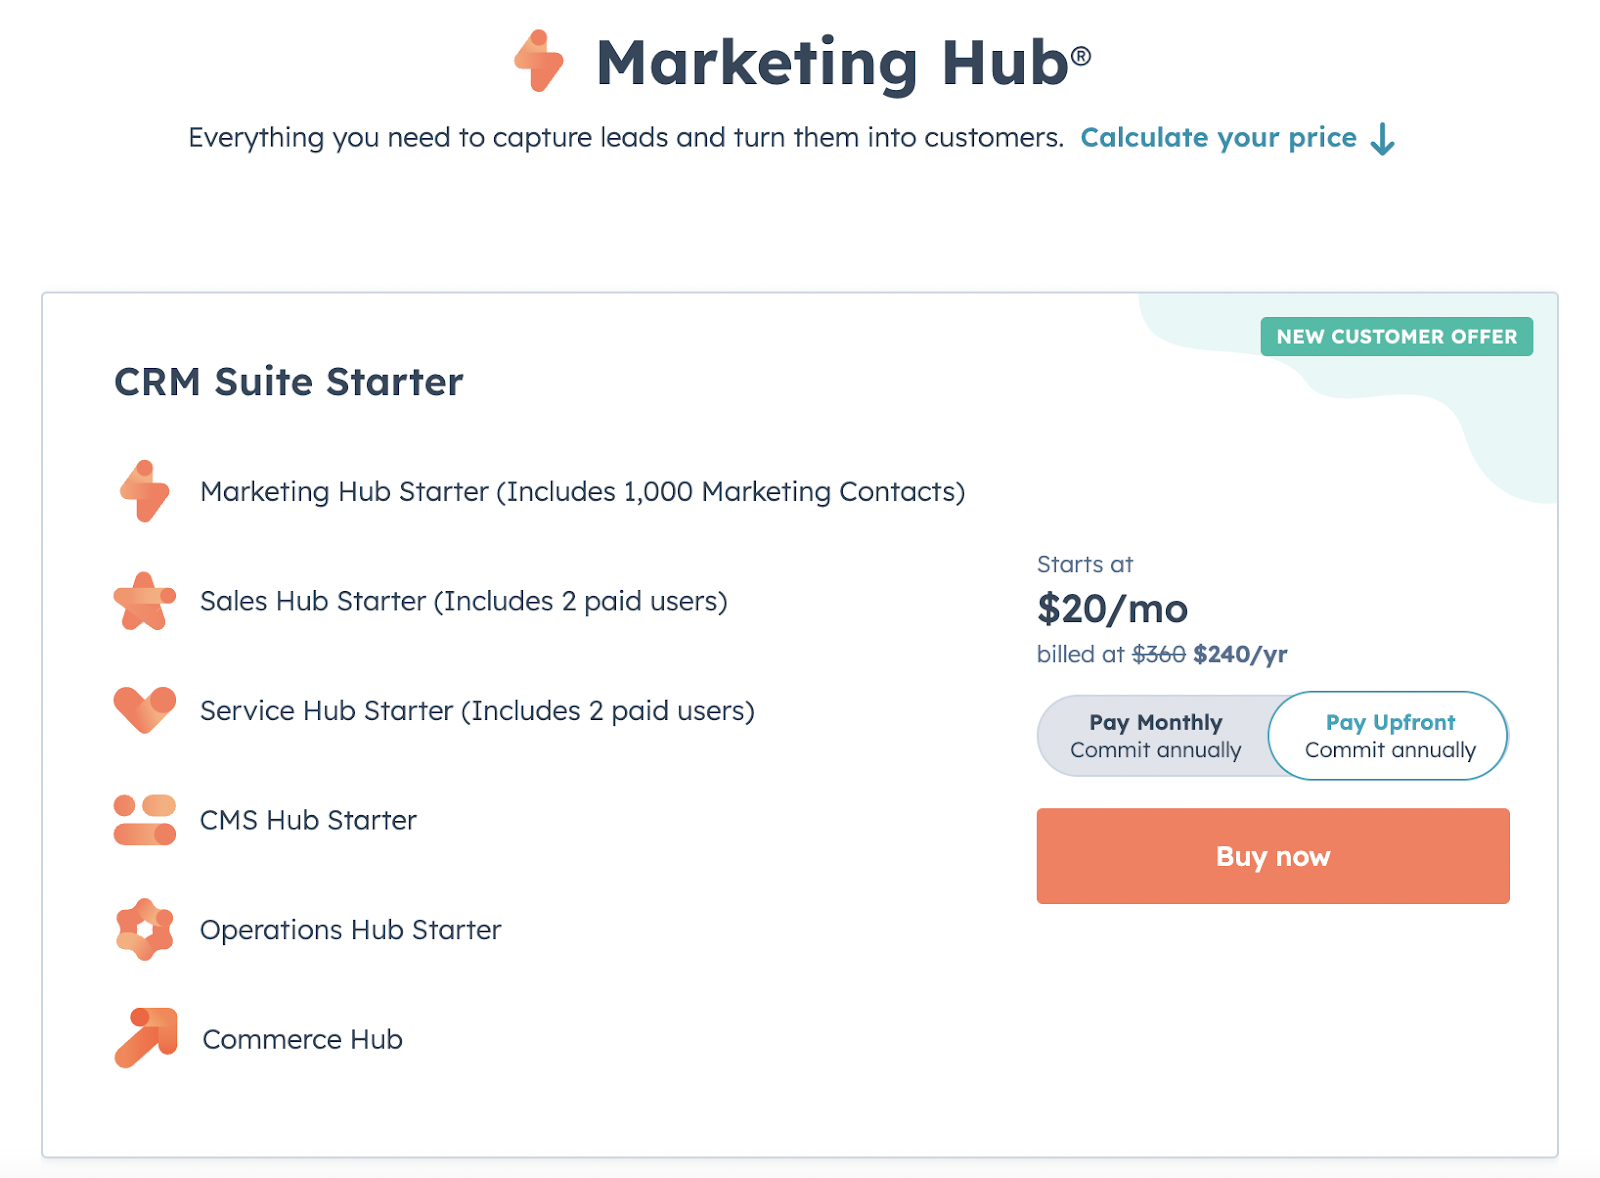 CRM Suite Starter's pricing plan under Marketing Hub